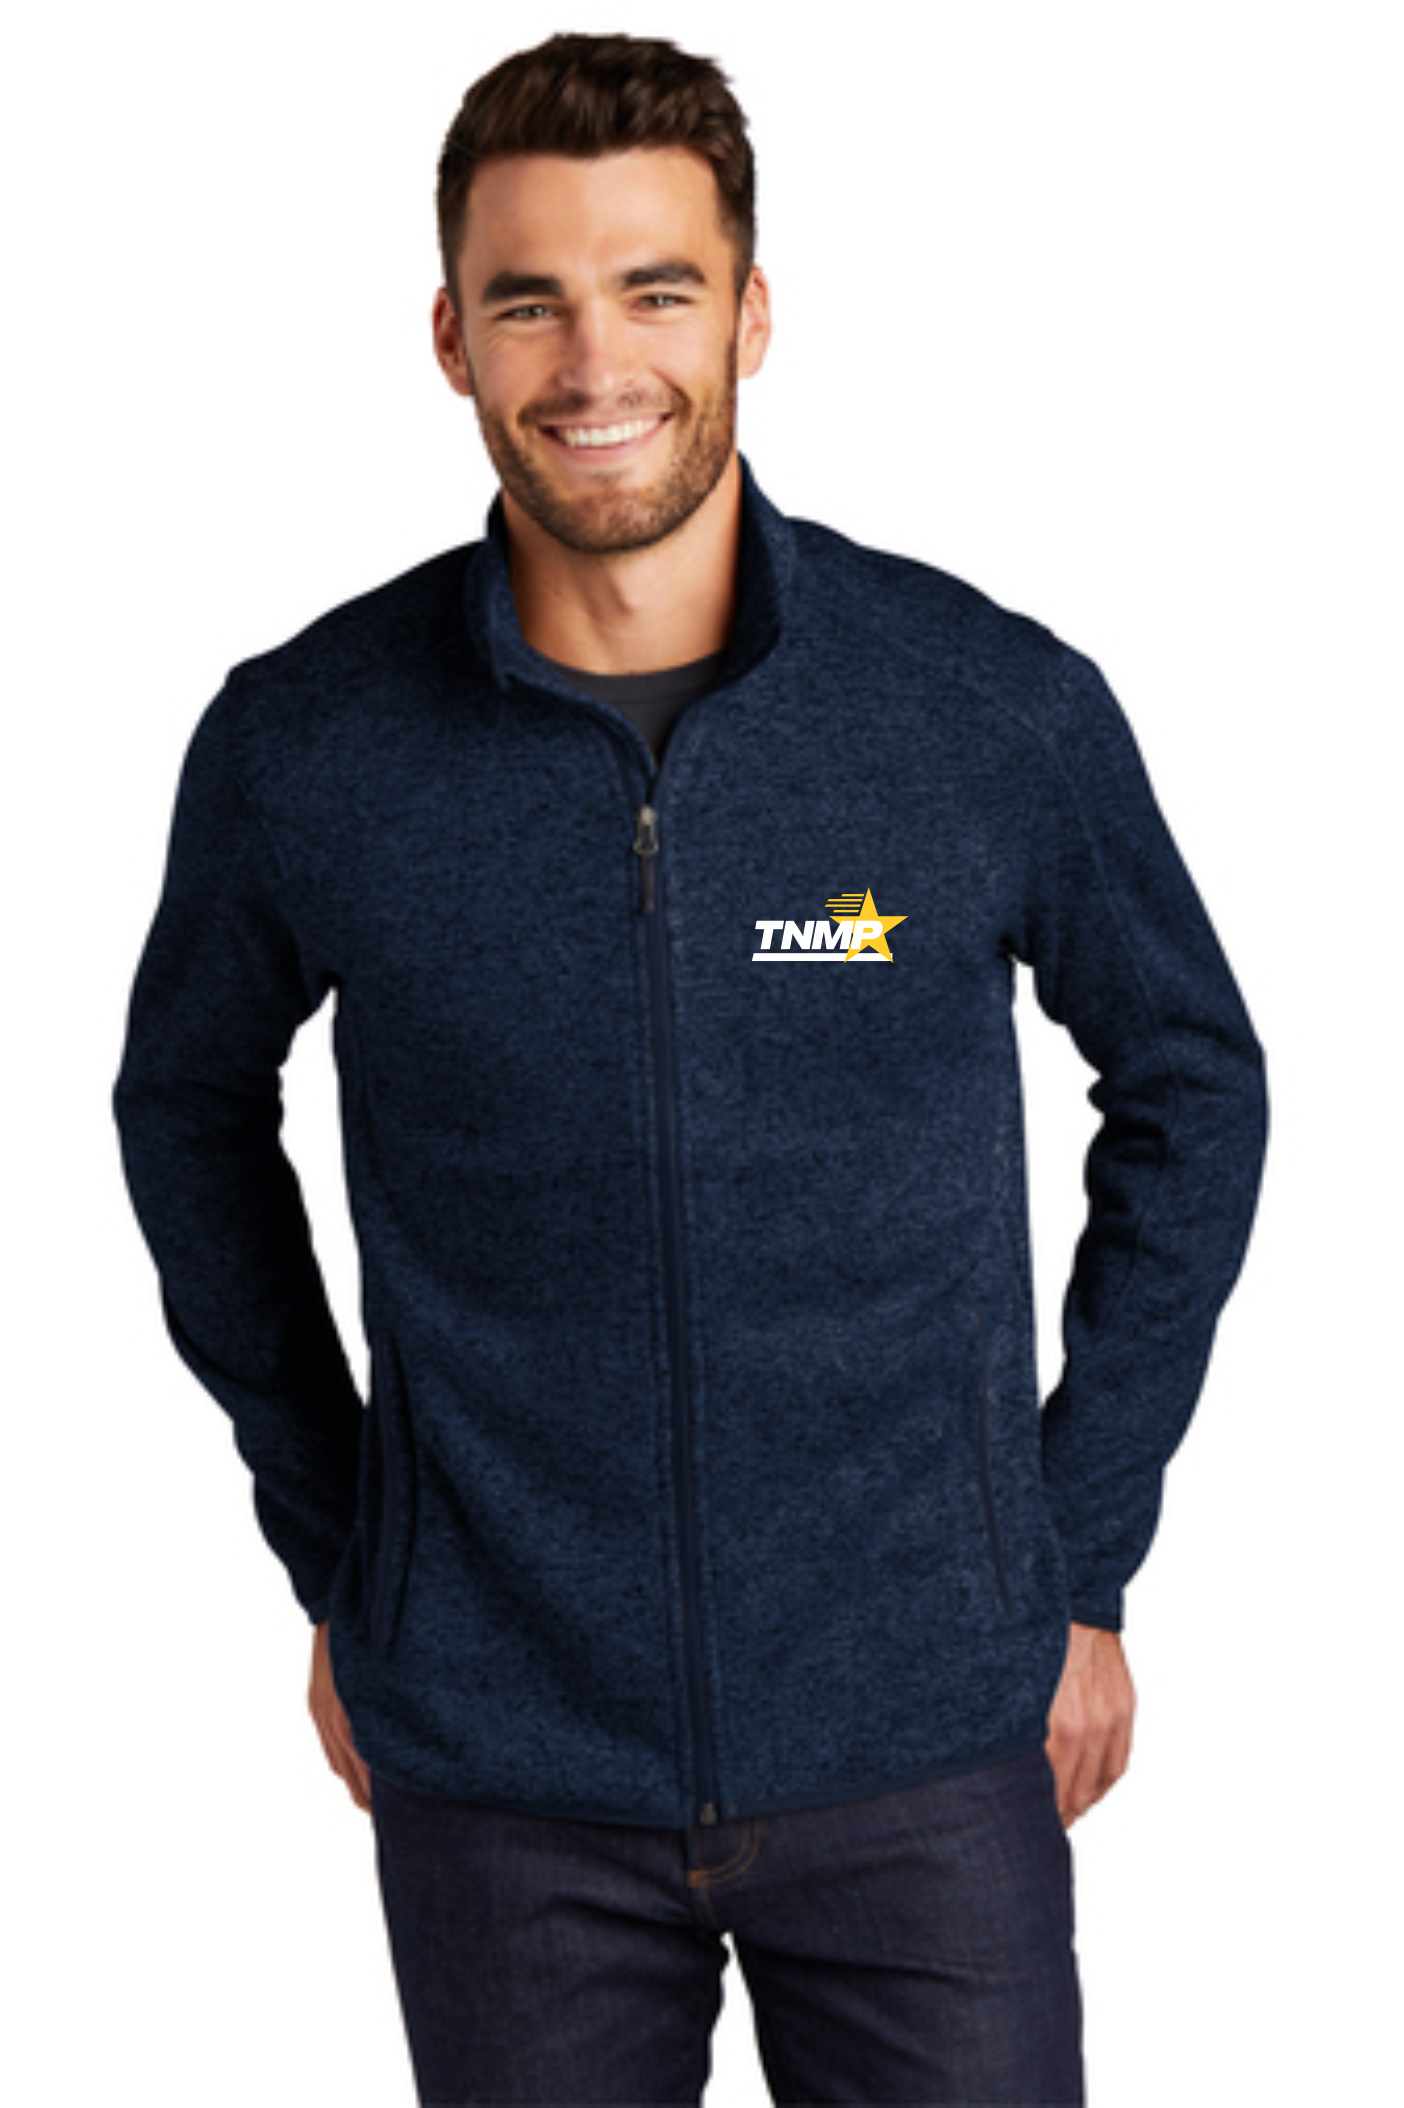 Port Authority® Sweater Fleece Jacket